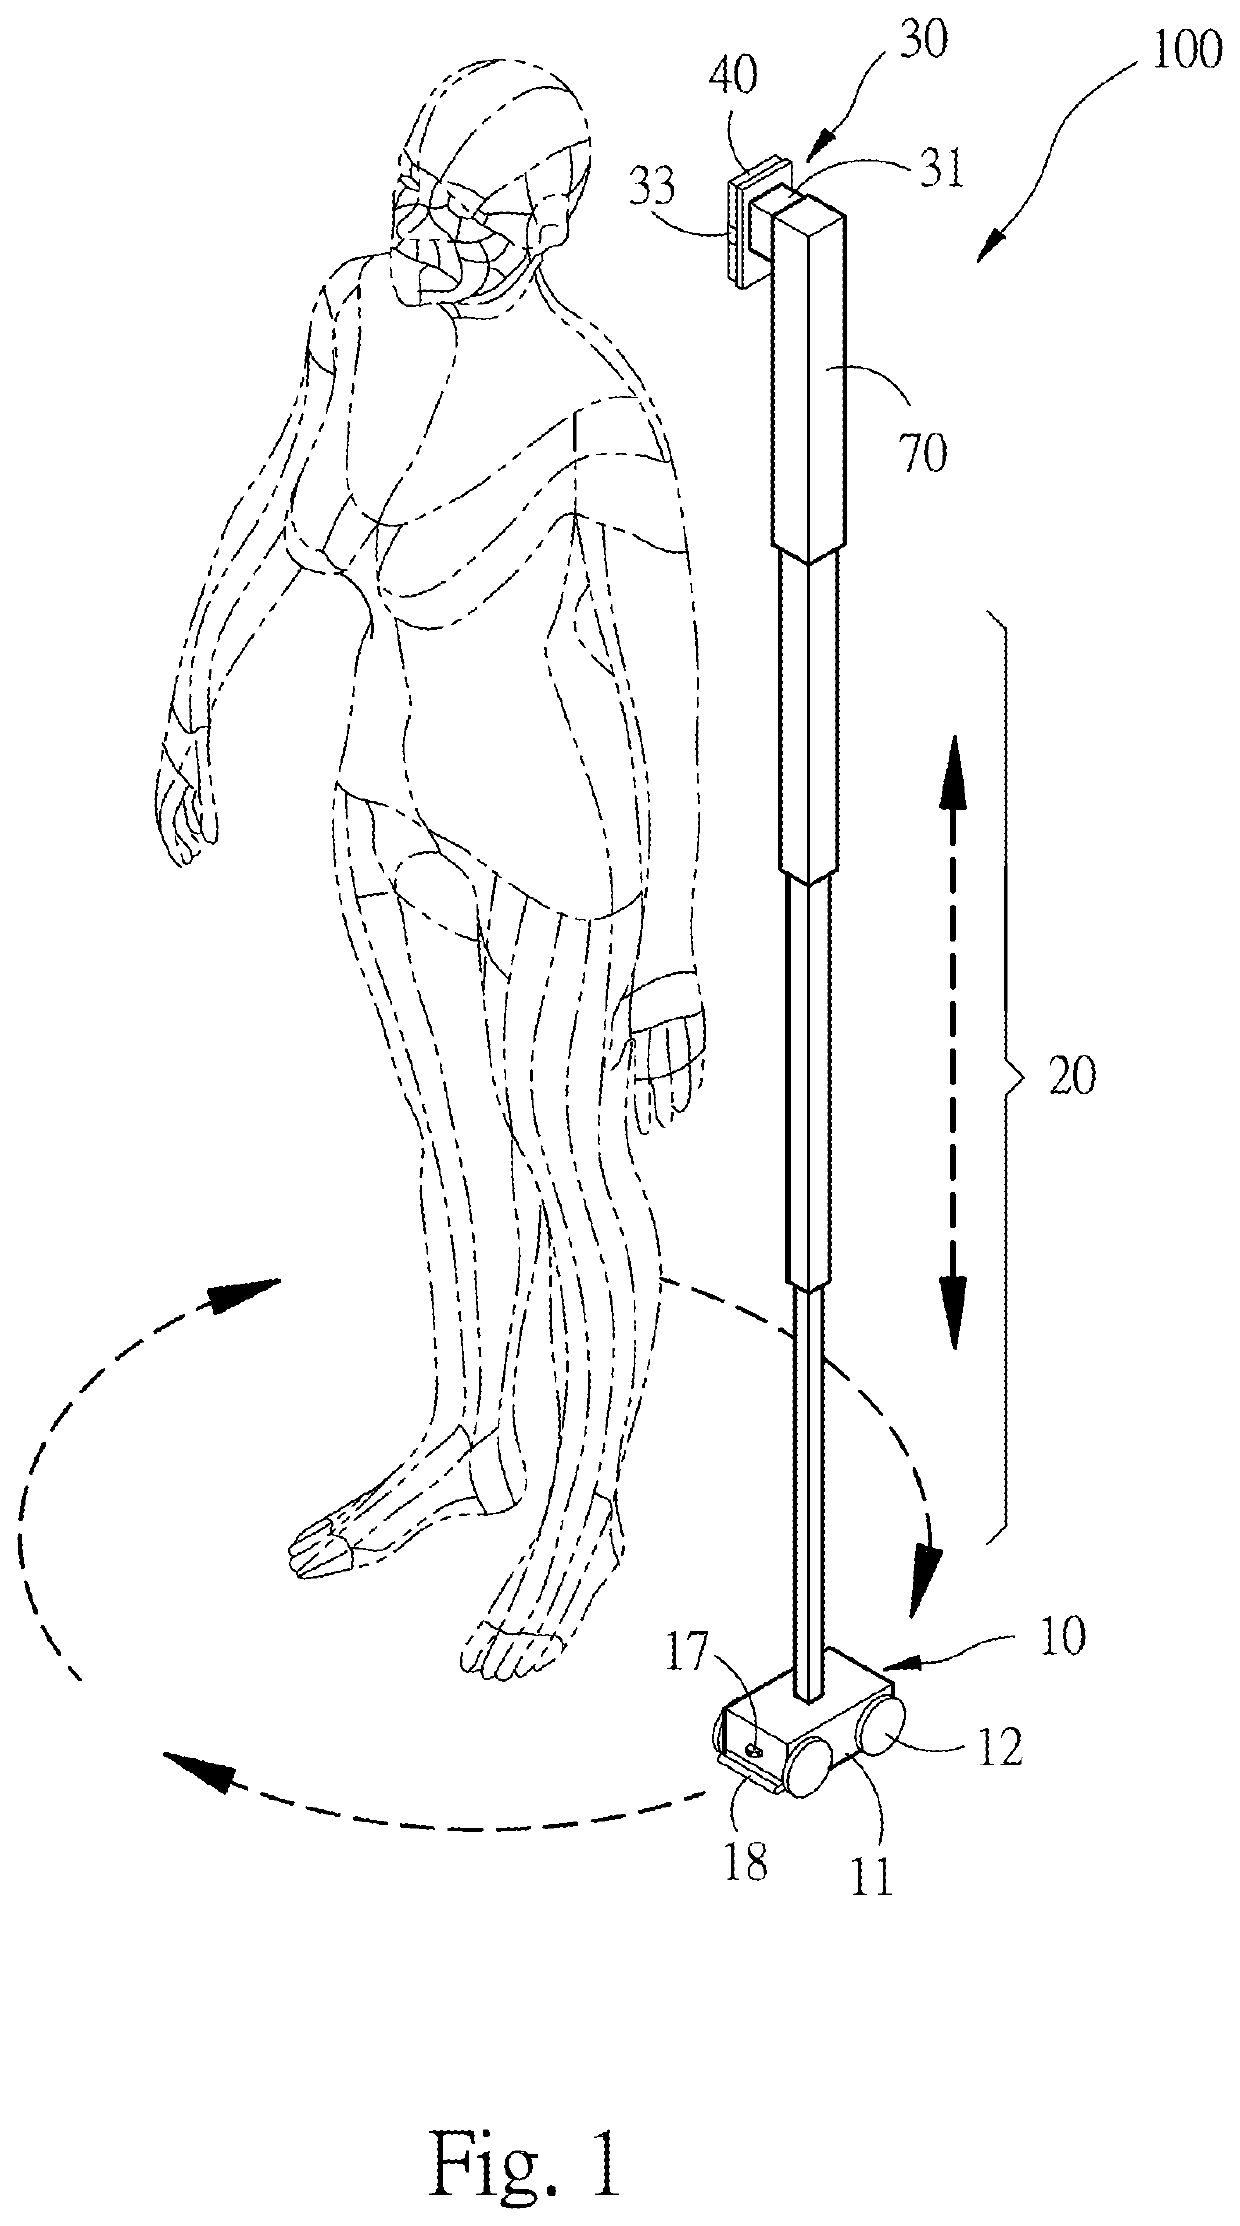 Three-dimensional human body scanning device